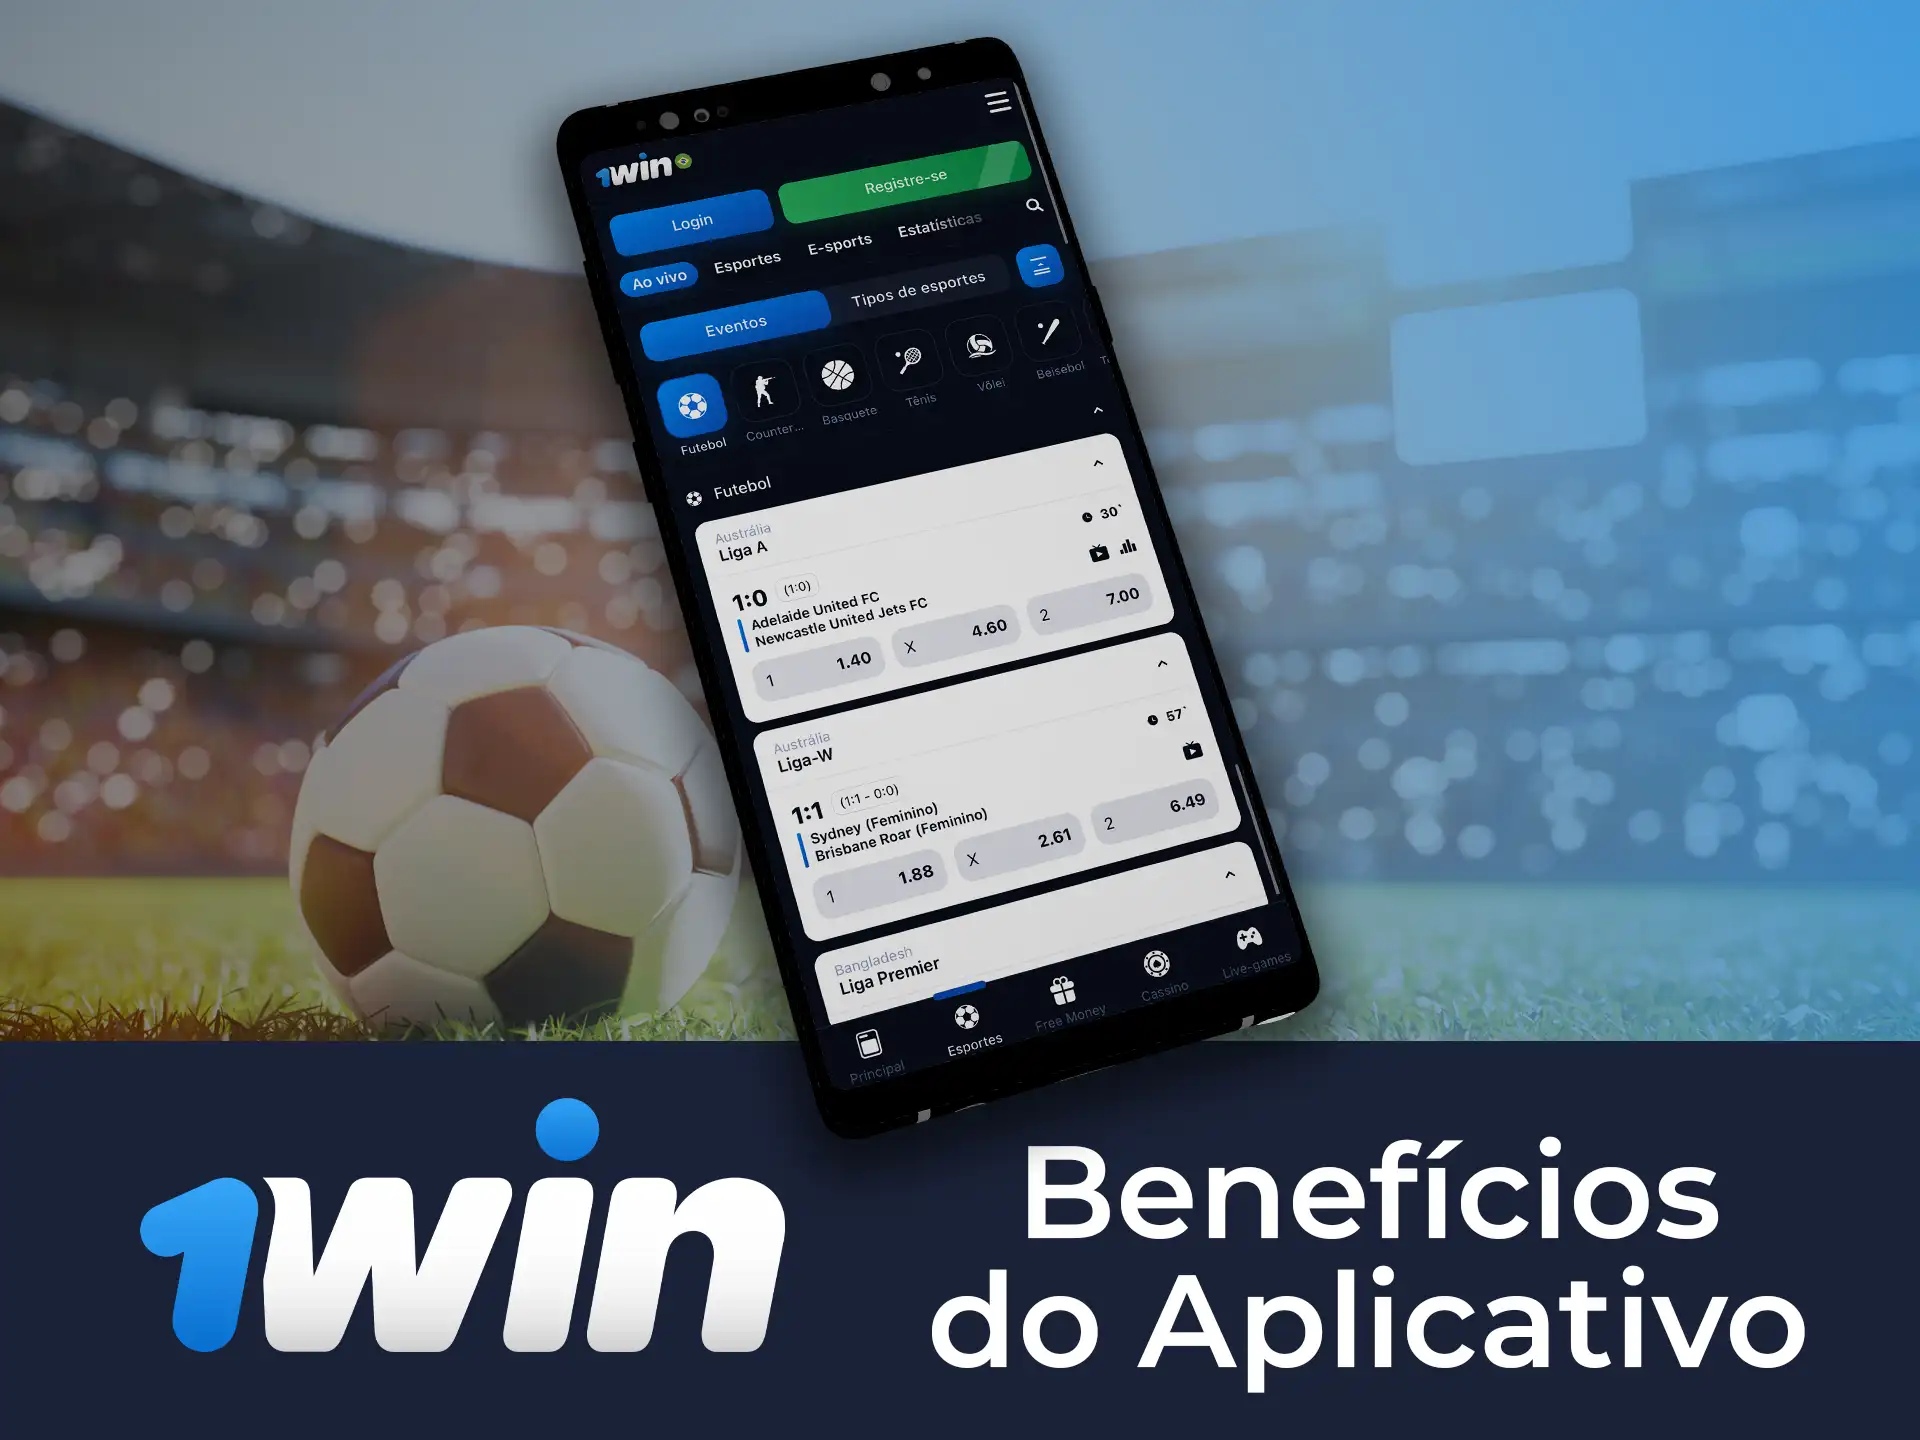 Os principais benefícios do aplicativo para os jogadores do 1win.